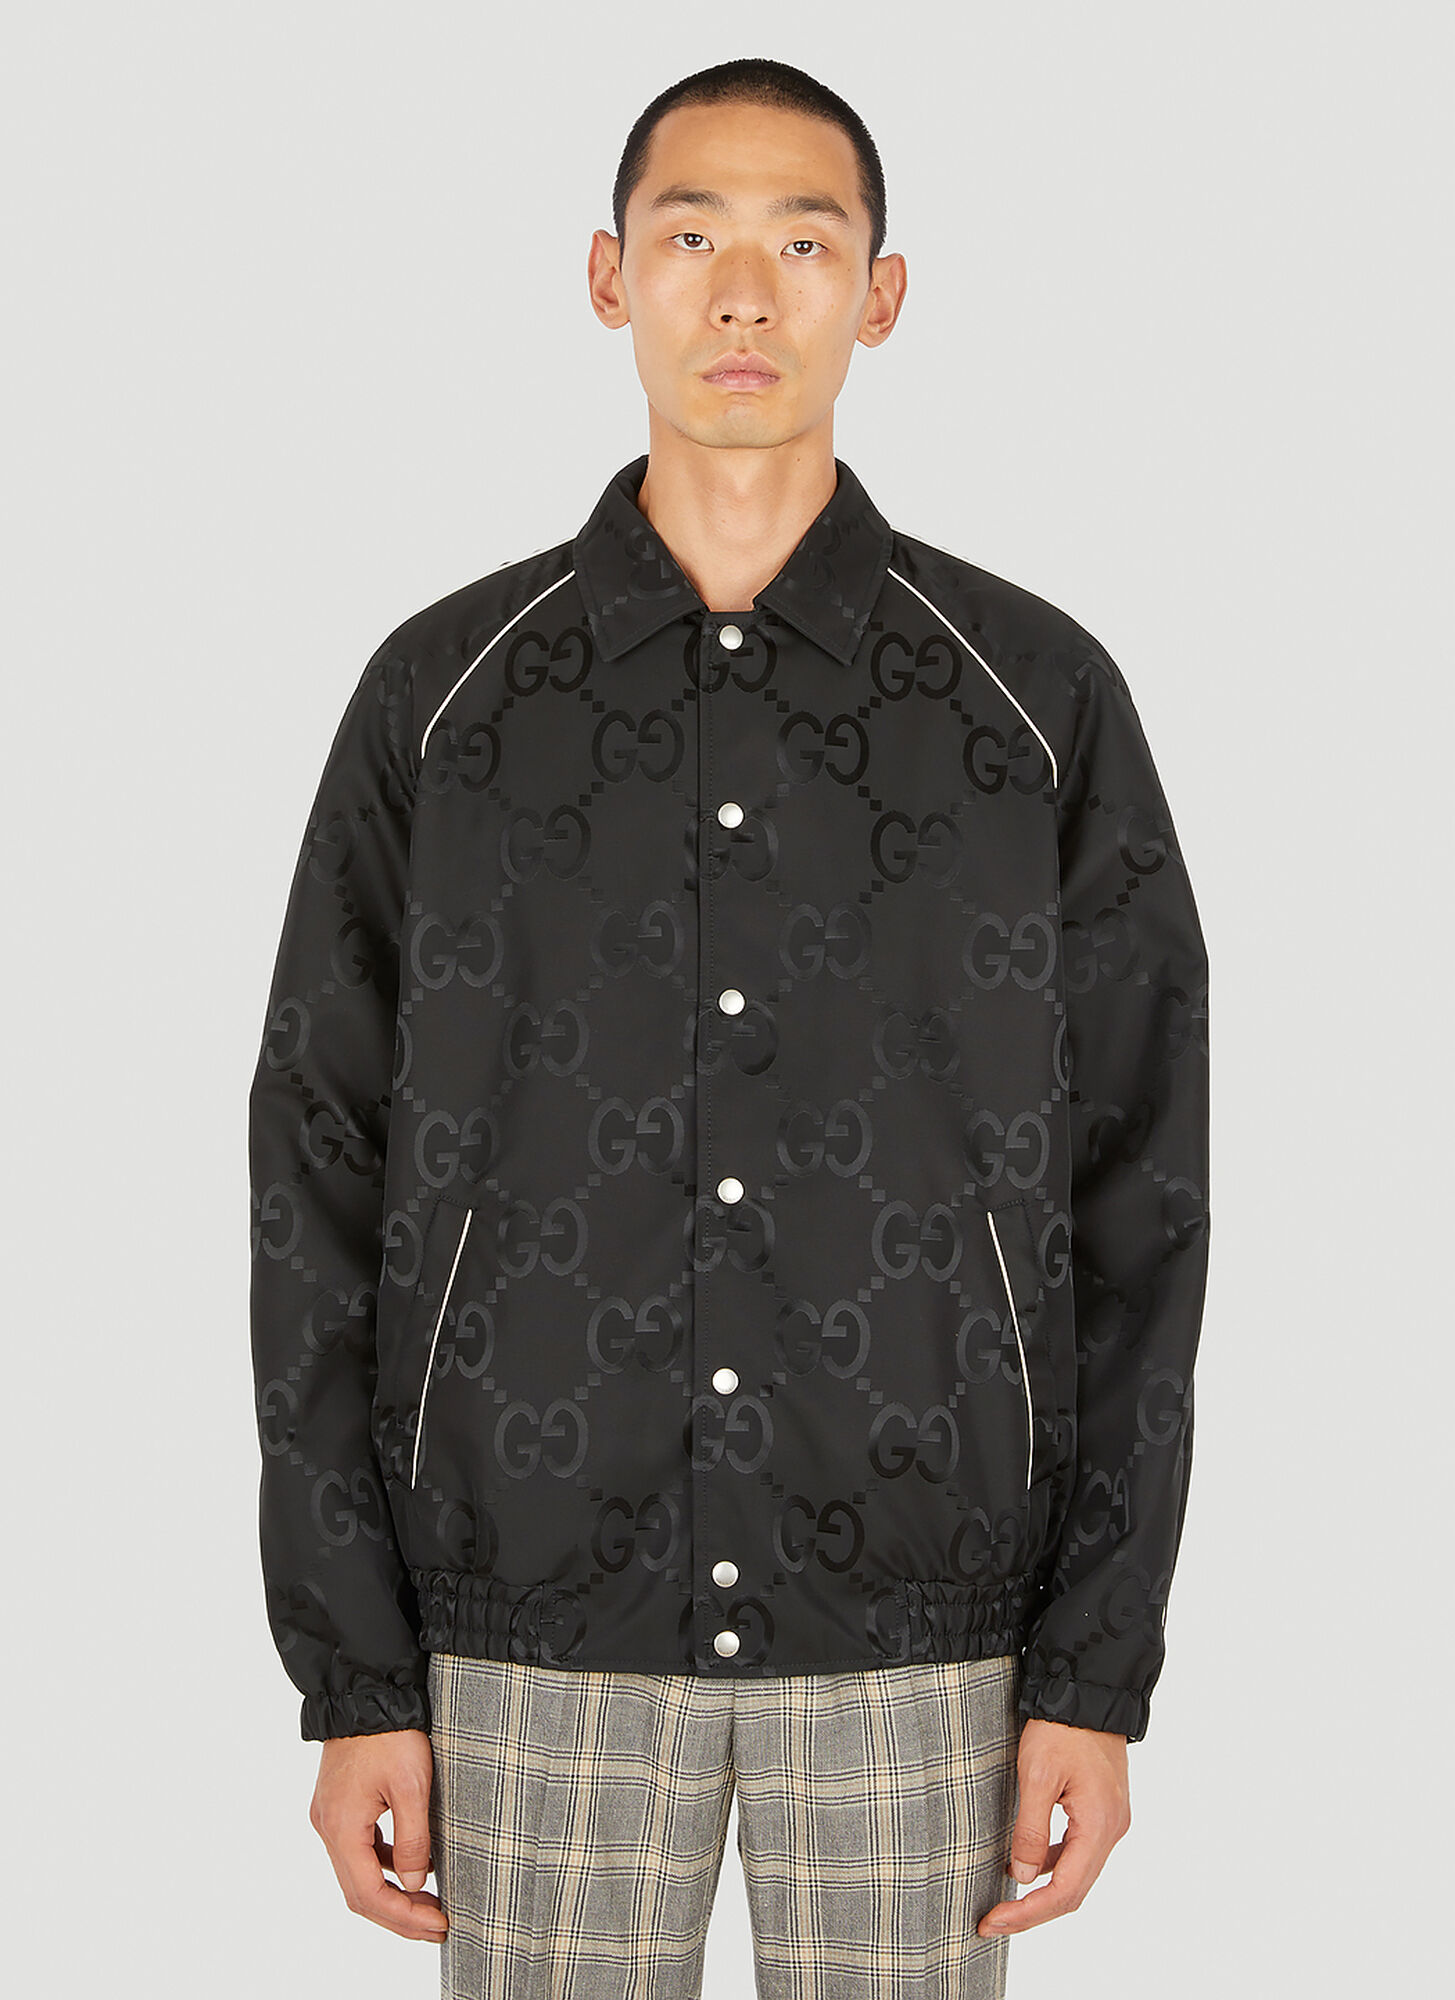 Jumbo GG canvas jacket in black